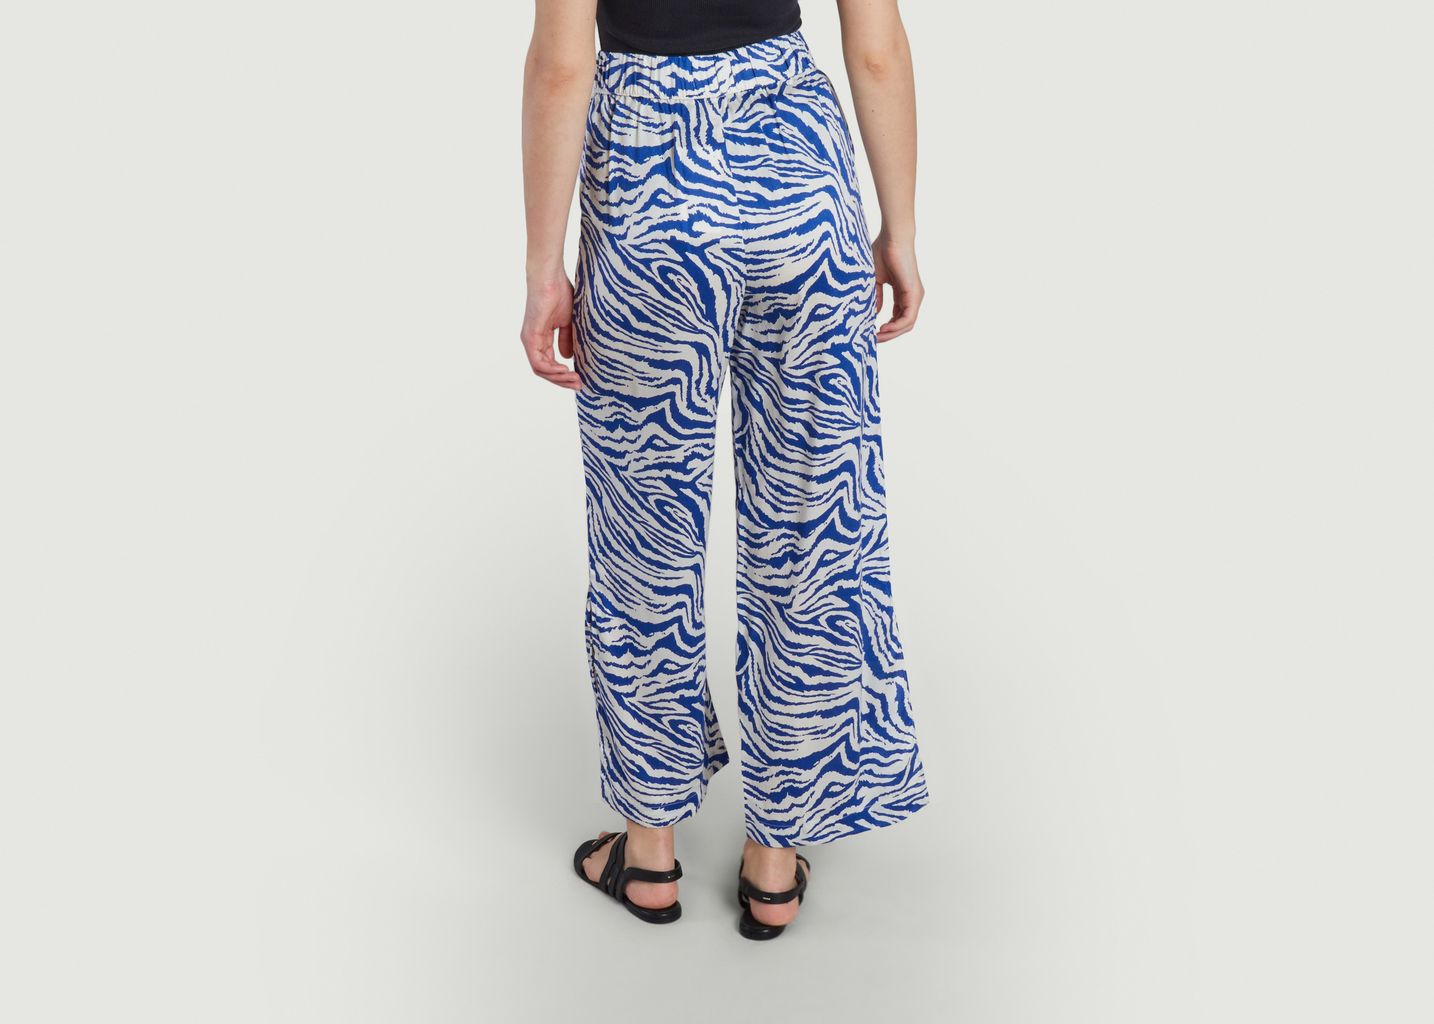 Pantalon koster zebra - Dedicated Brand